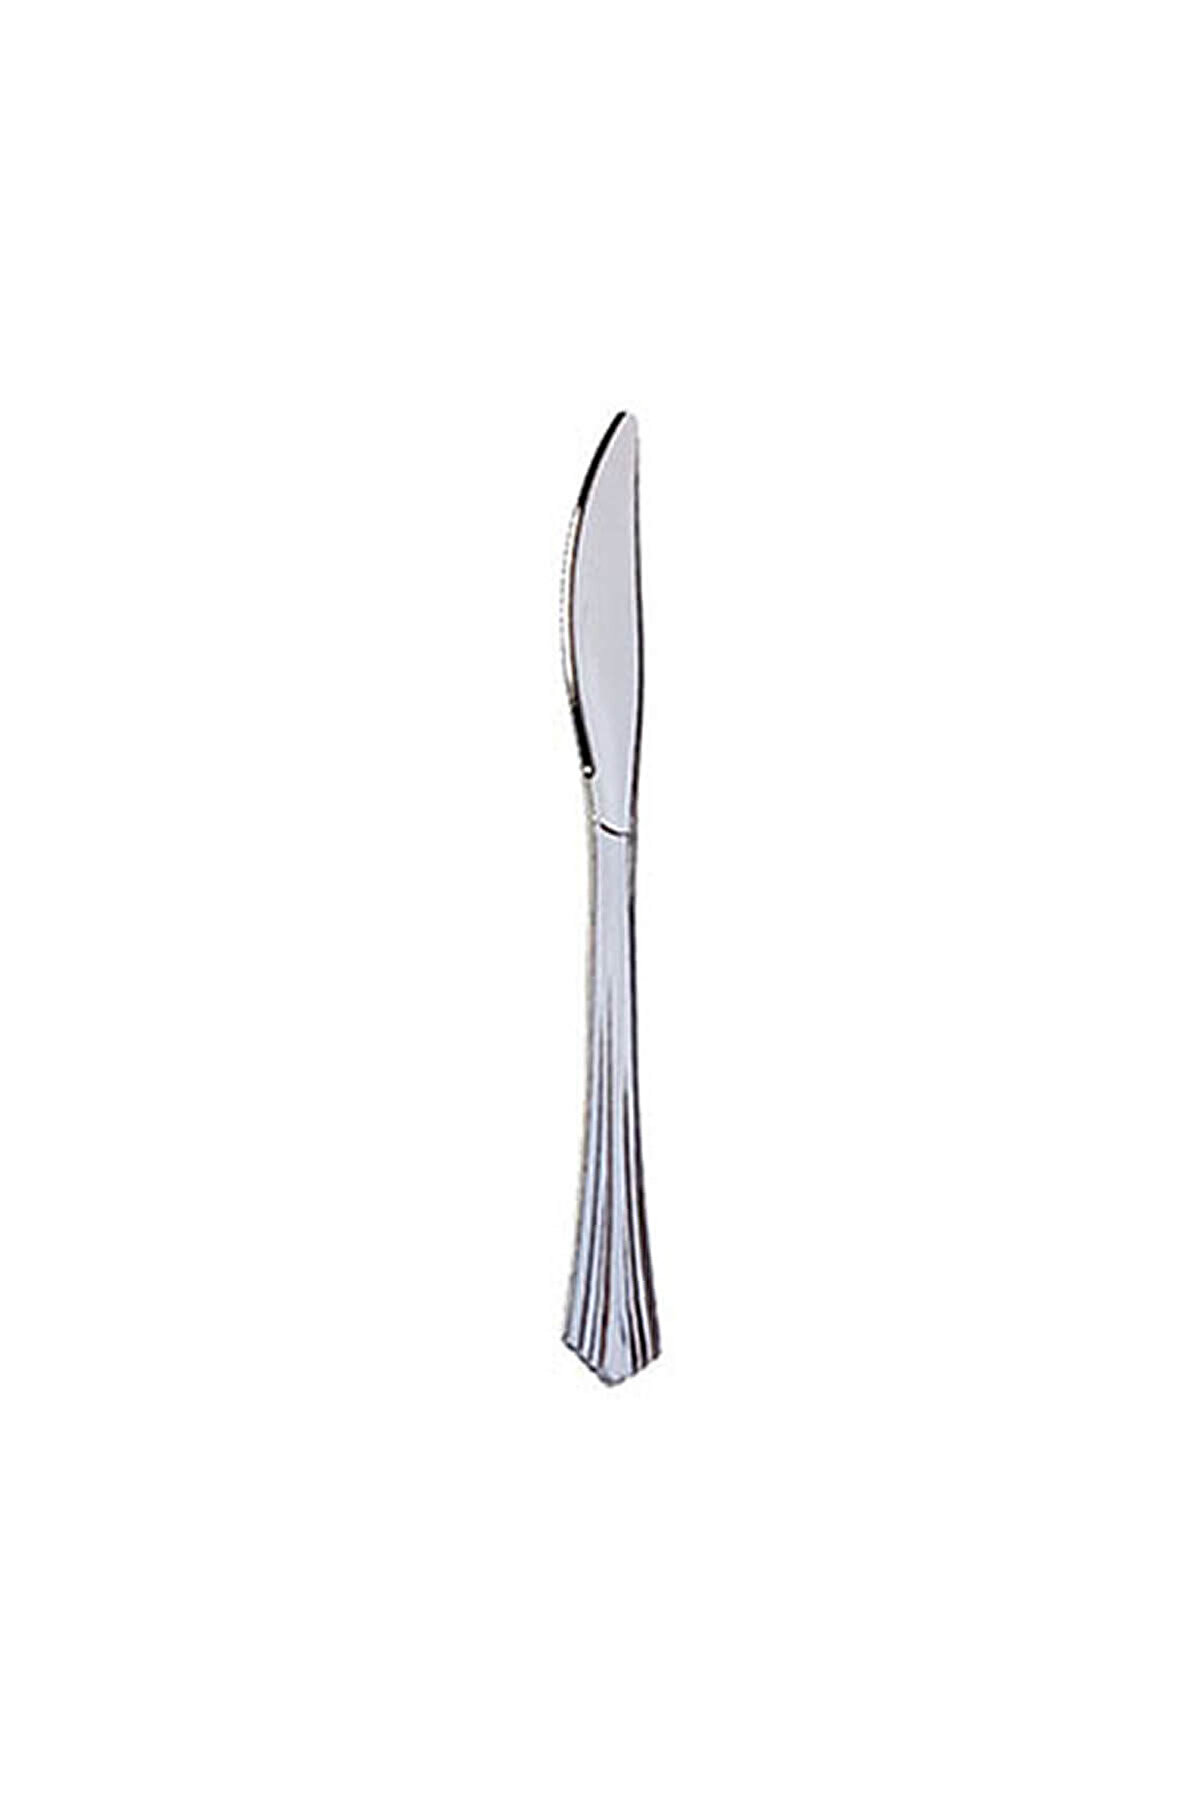 KullanAt Market Roll-Up Metal Görünümlü Bıçak